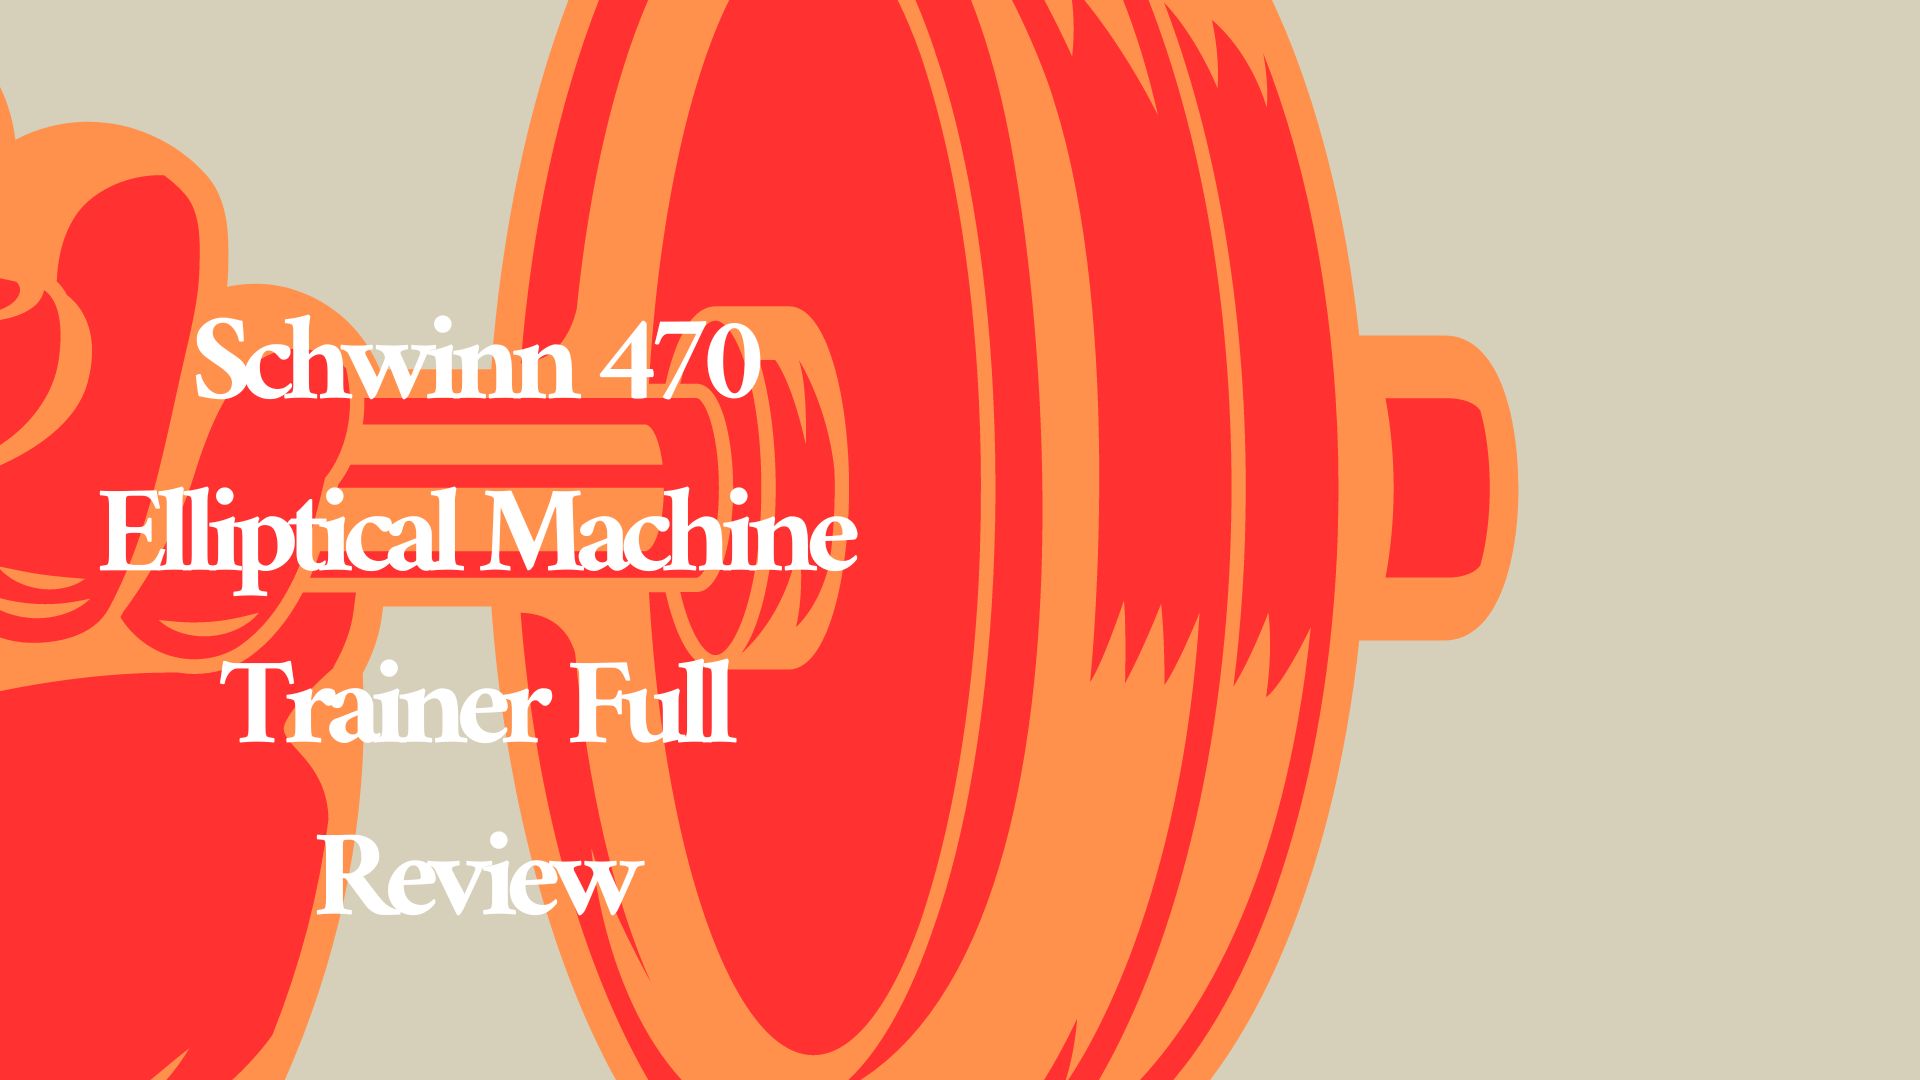 Schwinn 470 Elliptical Machine Trainer Full Review